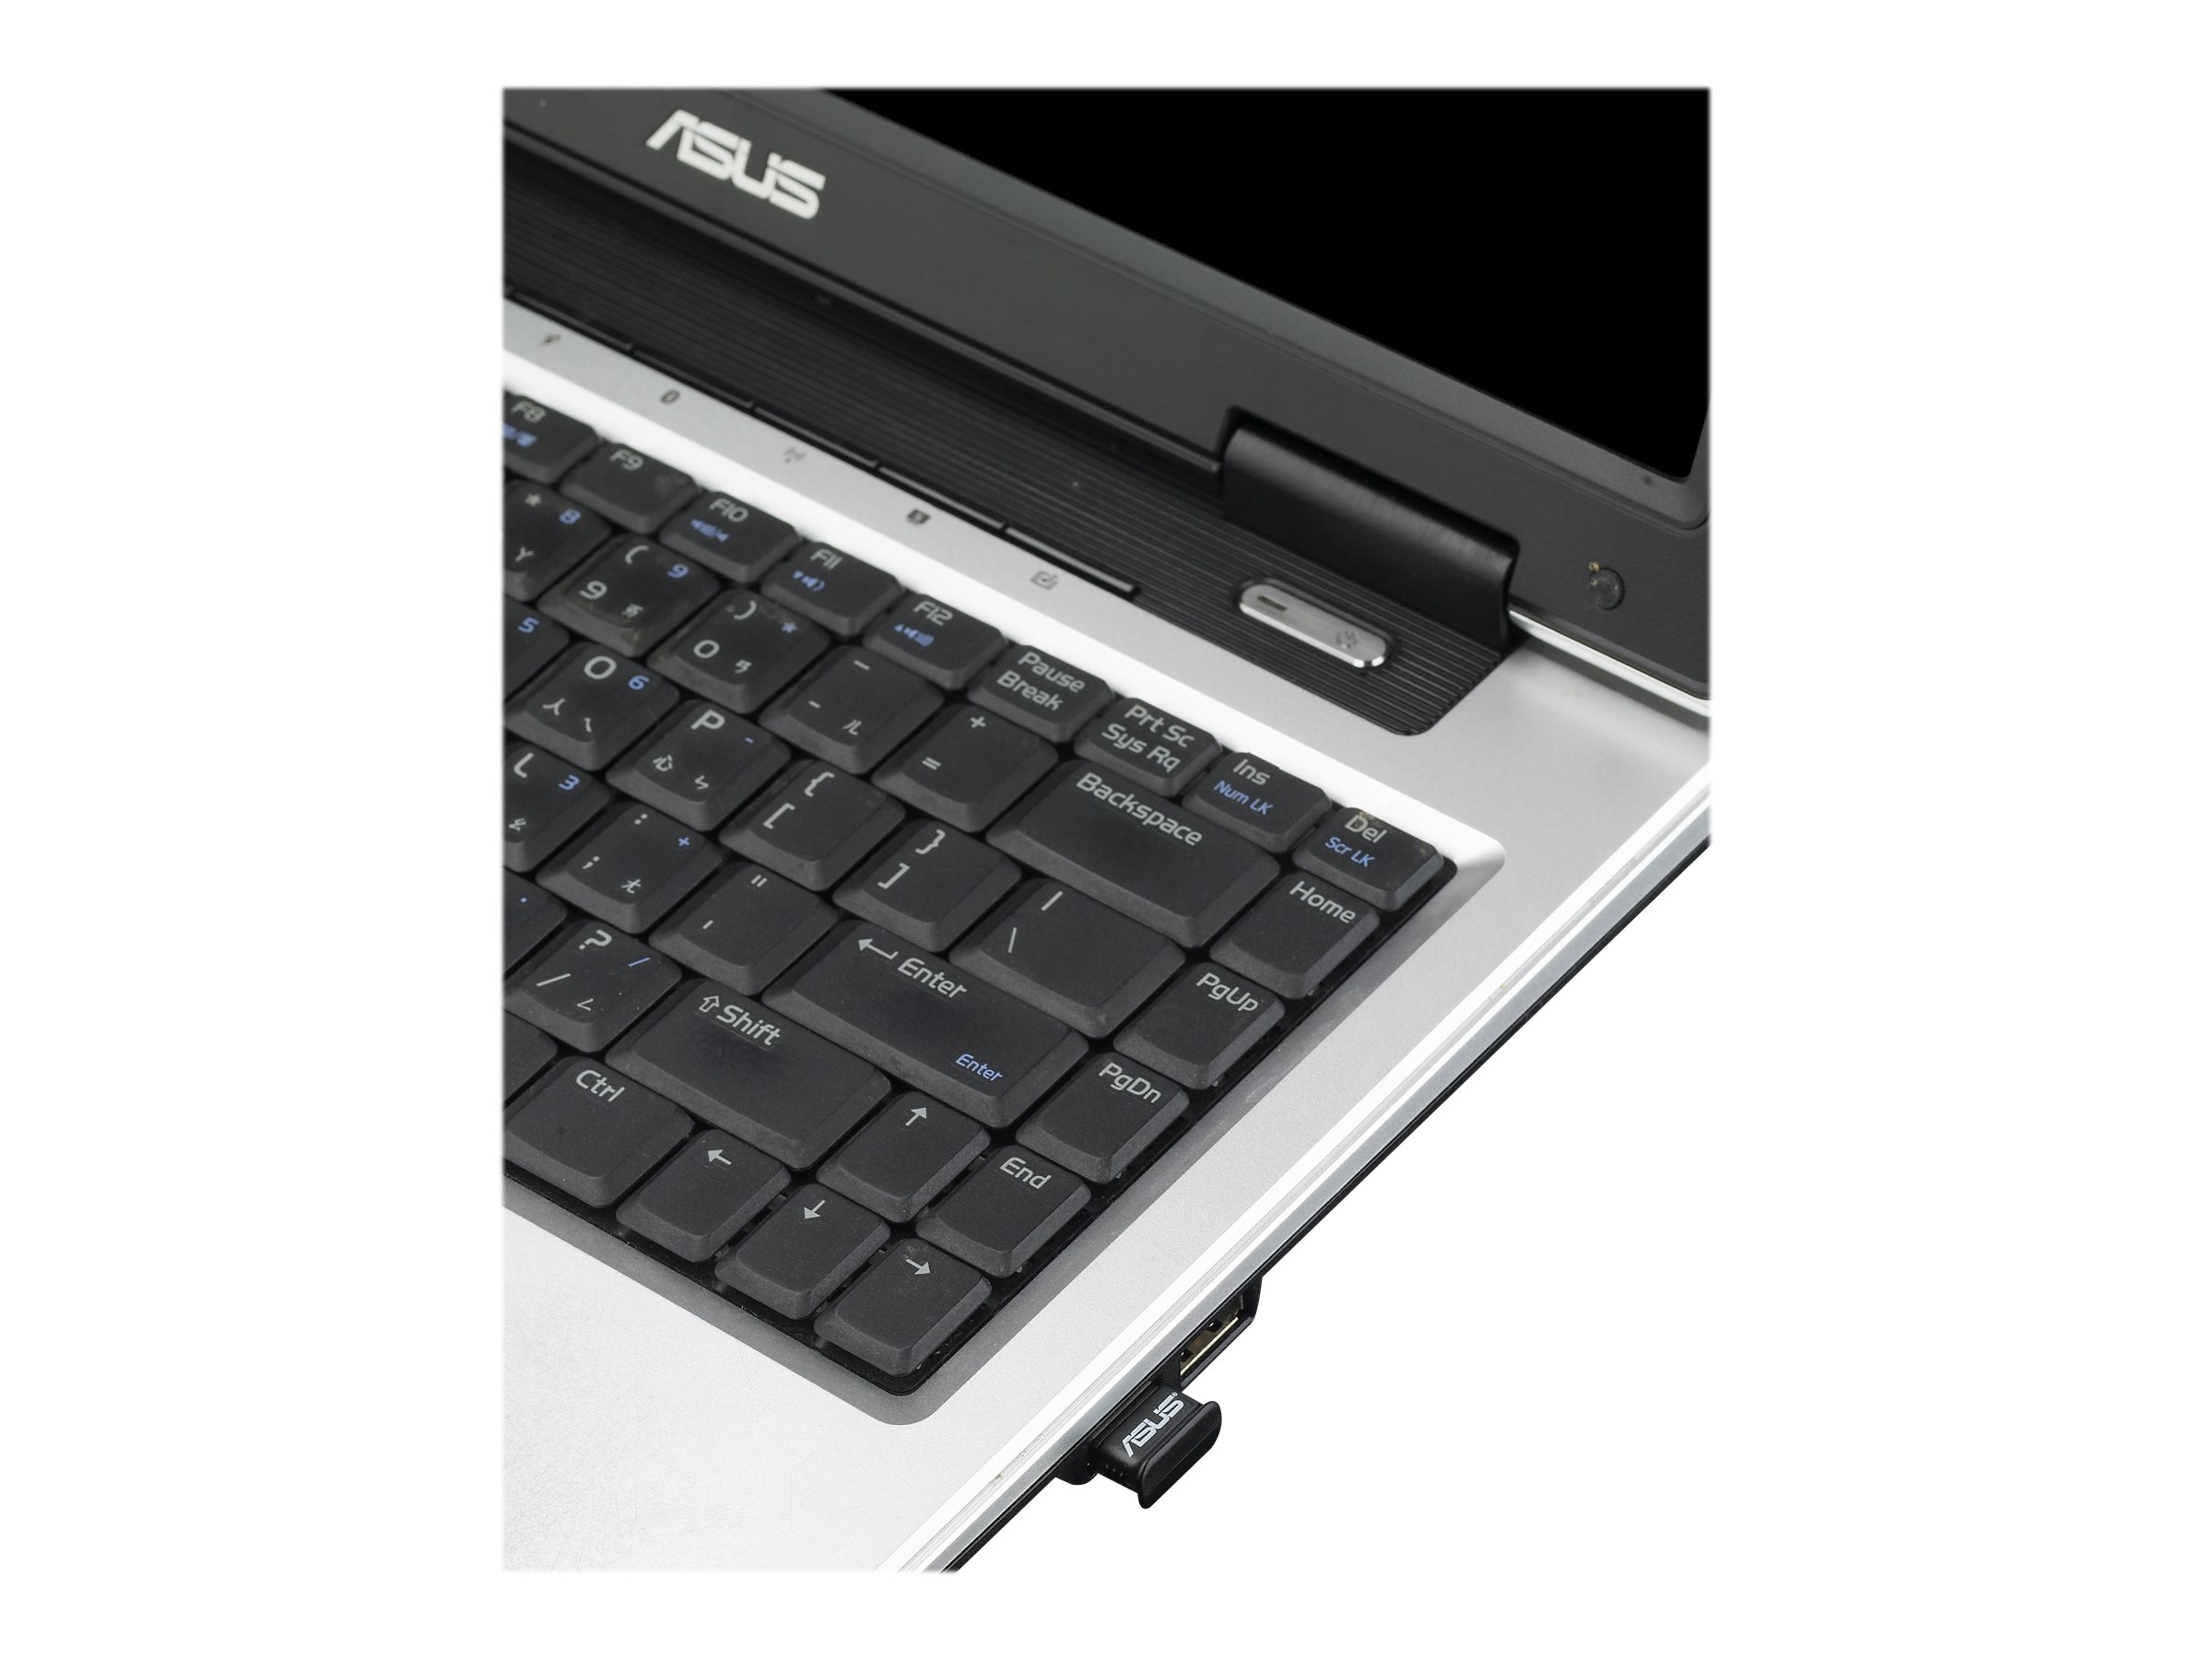 ASUS USB-BT400, Bluetooth 4.0 Stick